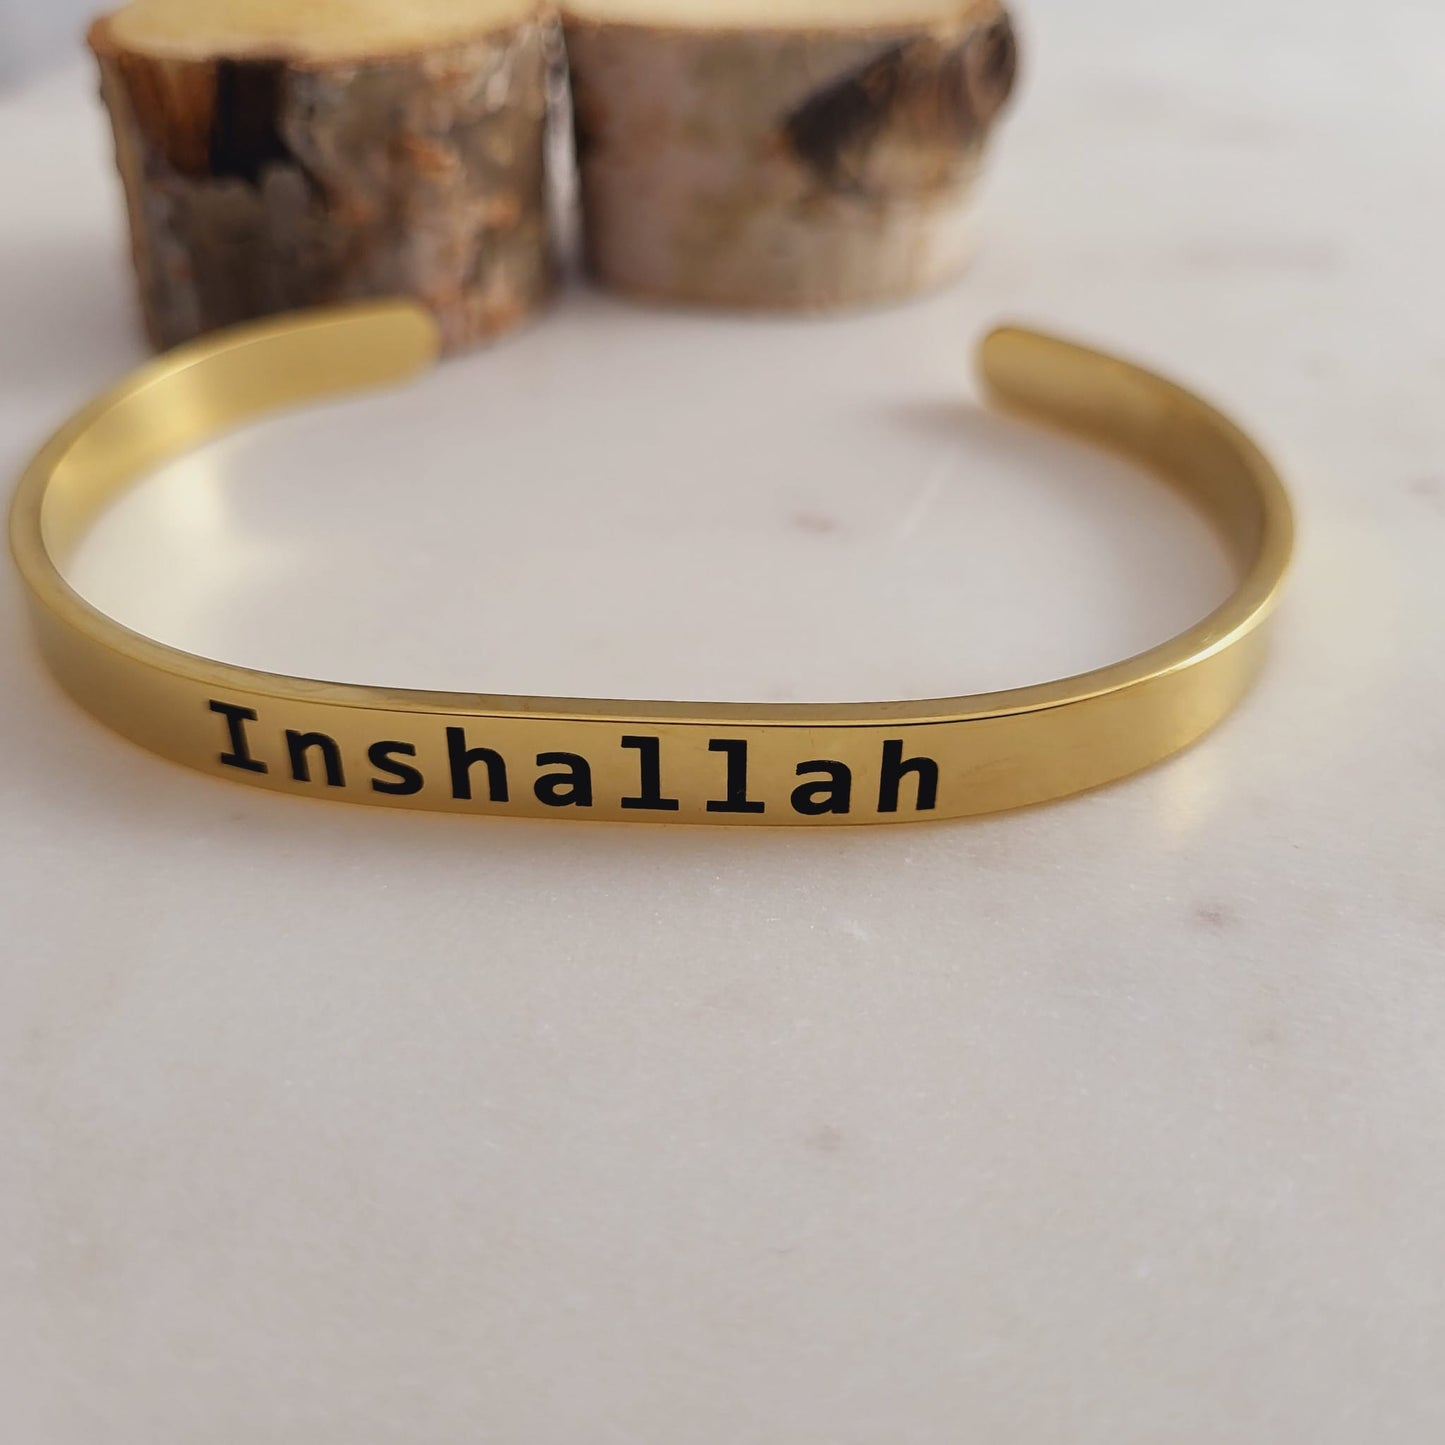 Ramadan Eid Gifts - Inshallah Bracelet Muslim Islamic Bracelet Gift